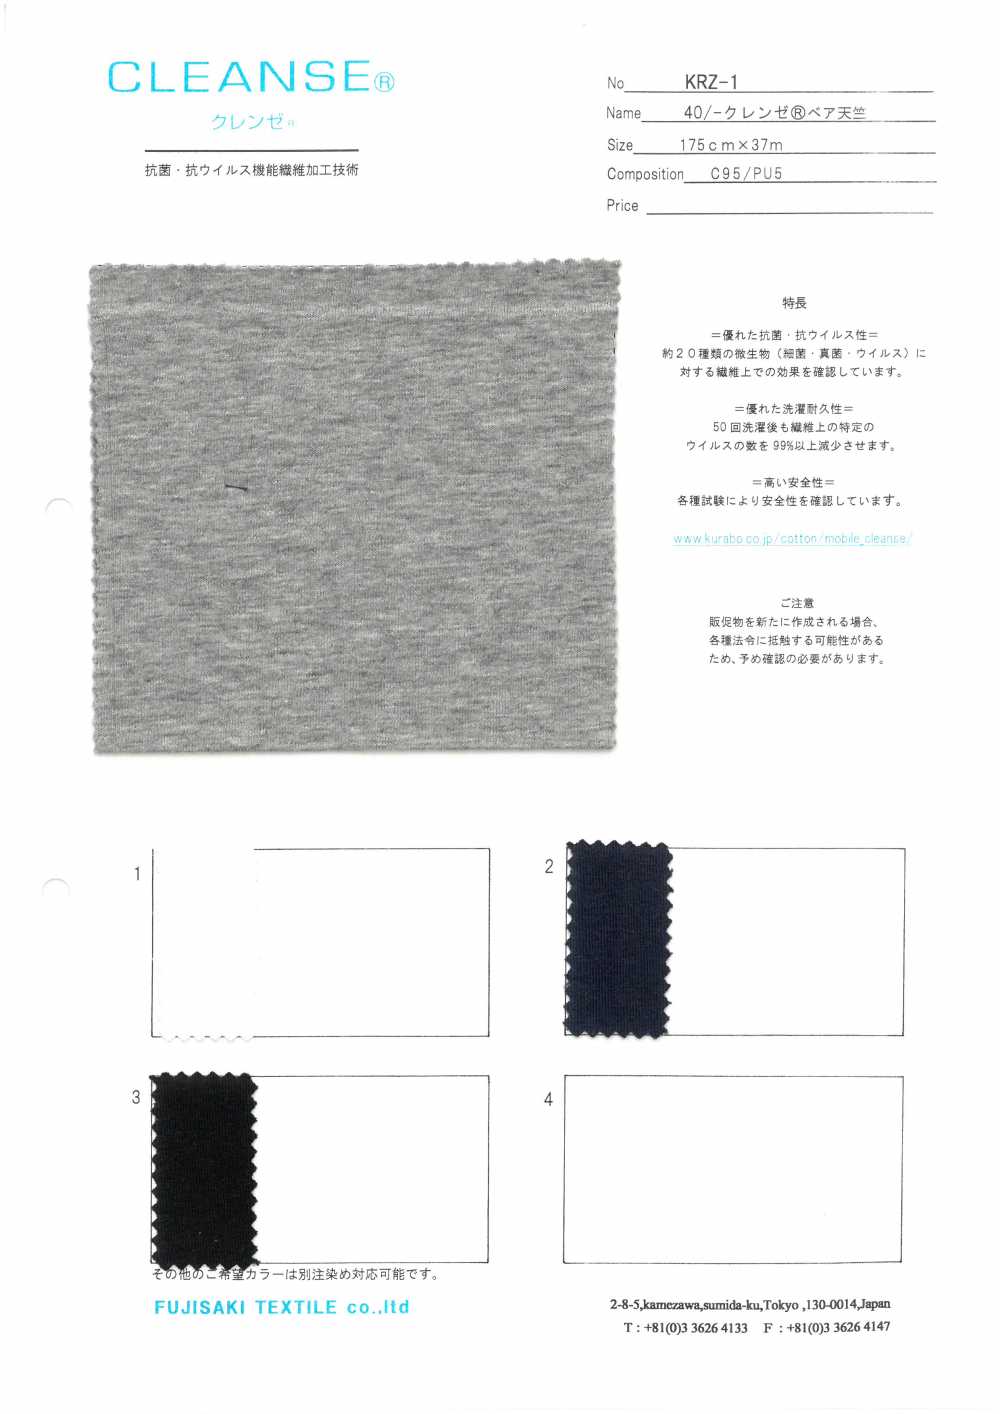 KRZ-1 40/ LIMPIEZA&#174;Bear Cotton Jersey[Fabrica Textil] Fujisaki Textile